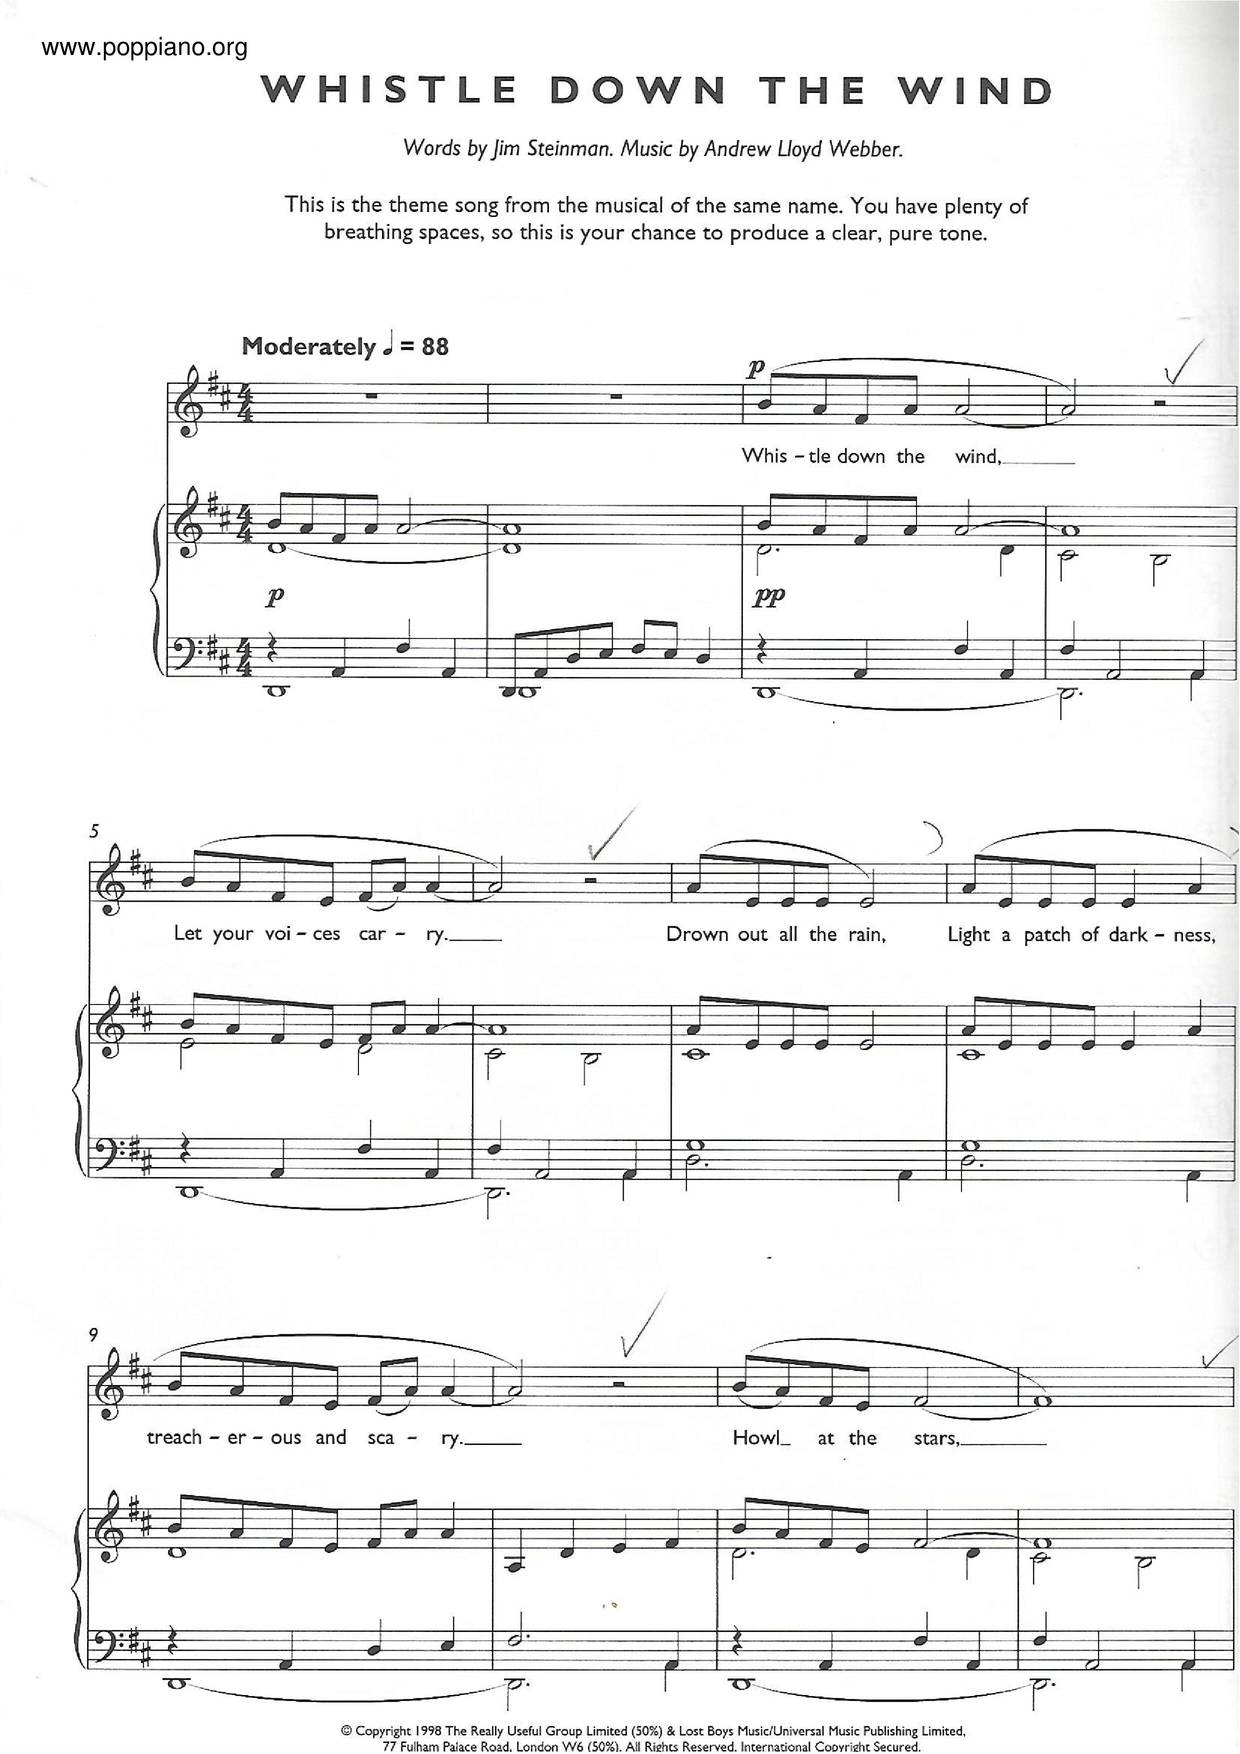 ☆ Whistle Down The Wind - Sheet Music / Piano Score Free PDF 